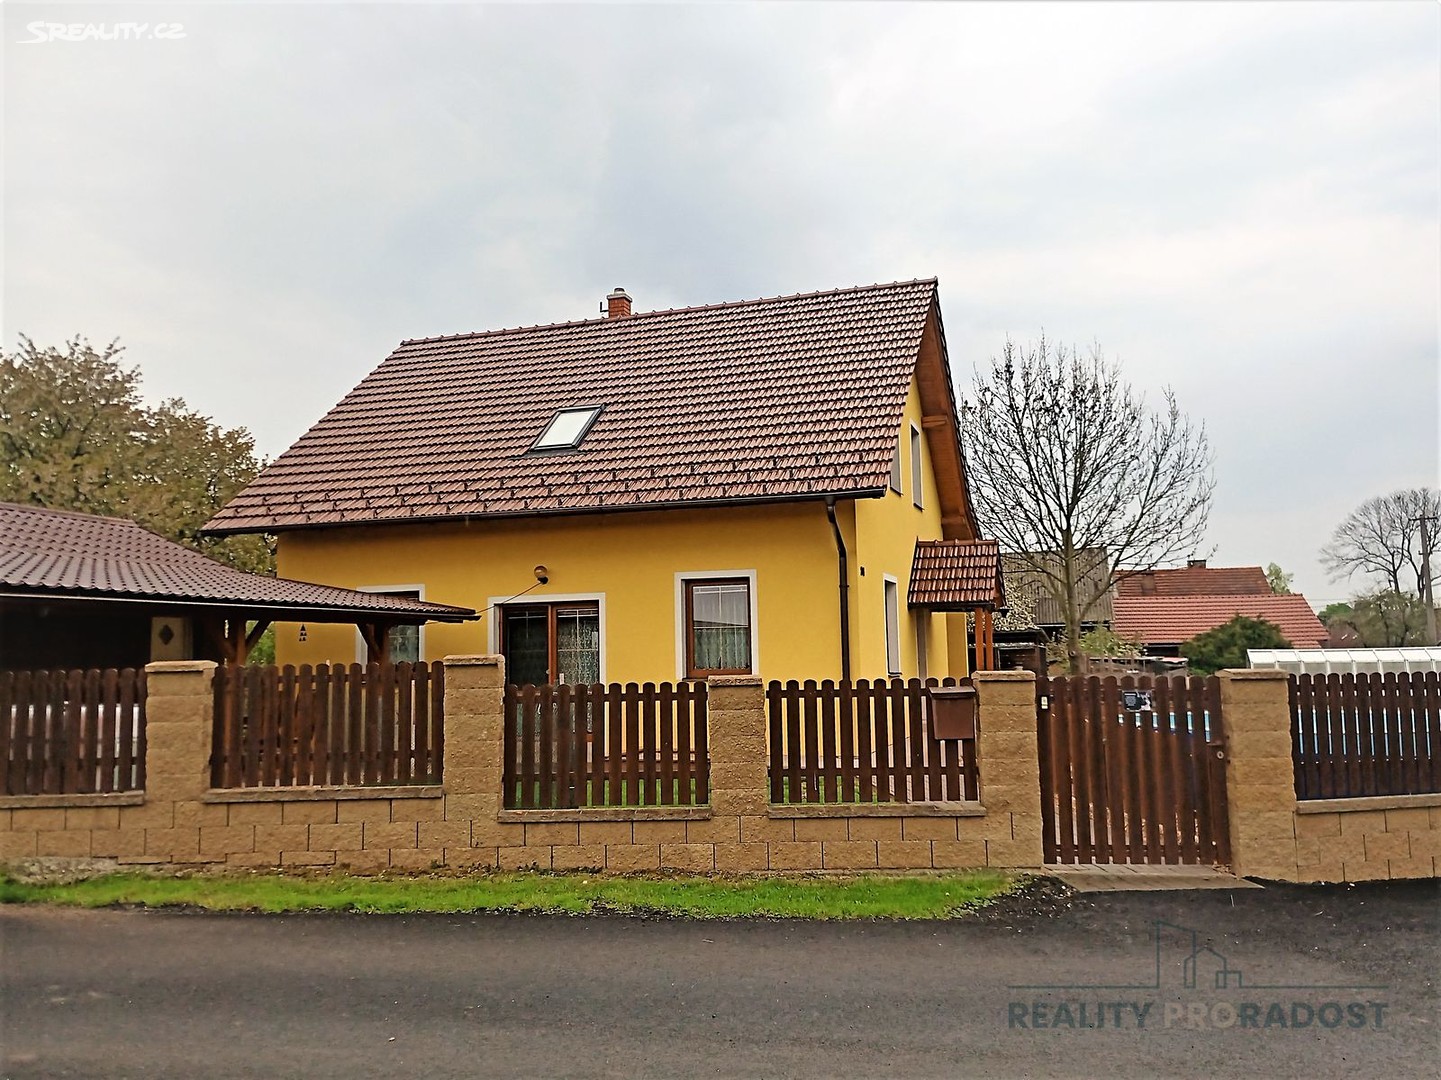 Prodej  rodinného domu 162 m², pozemek 592 m², Kacákova Lhota - Náchodsko, okres Jičín